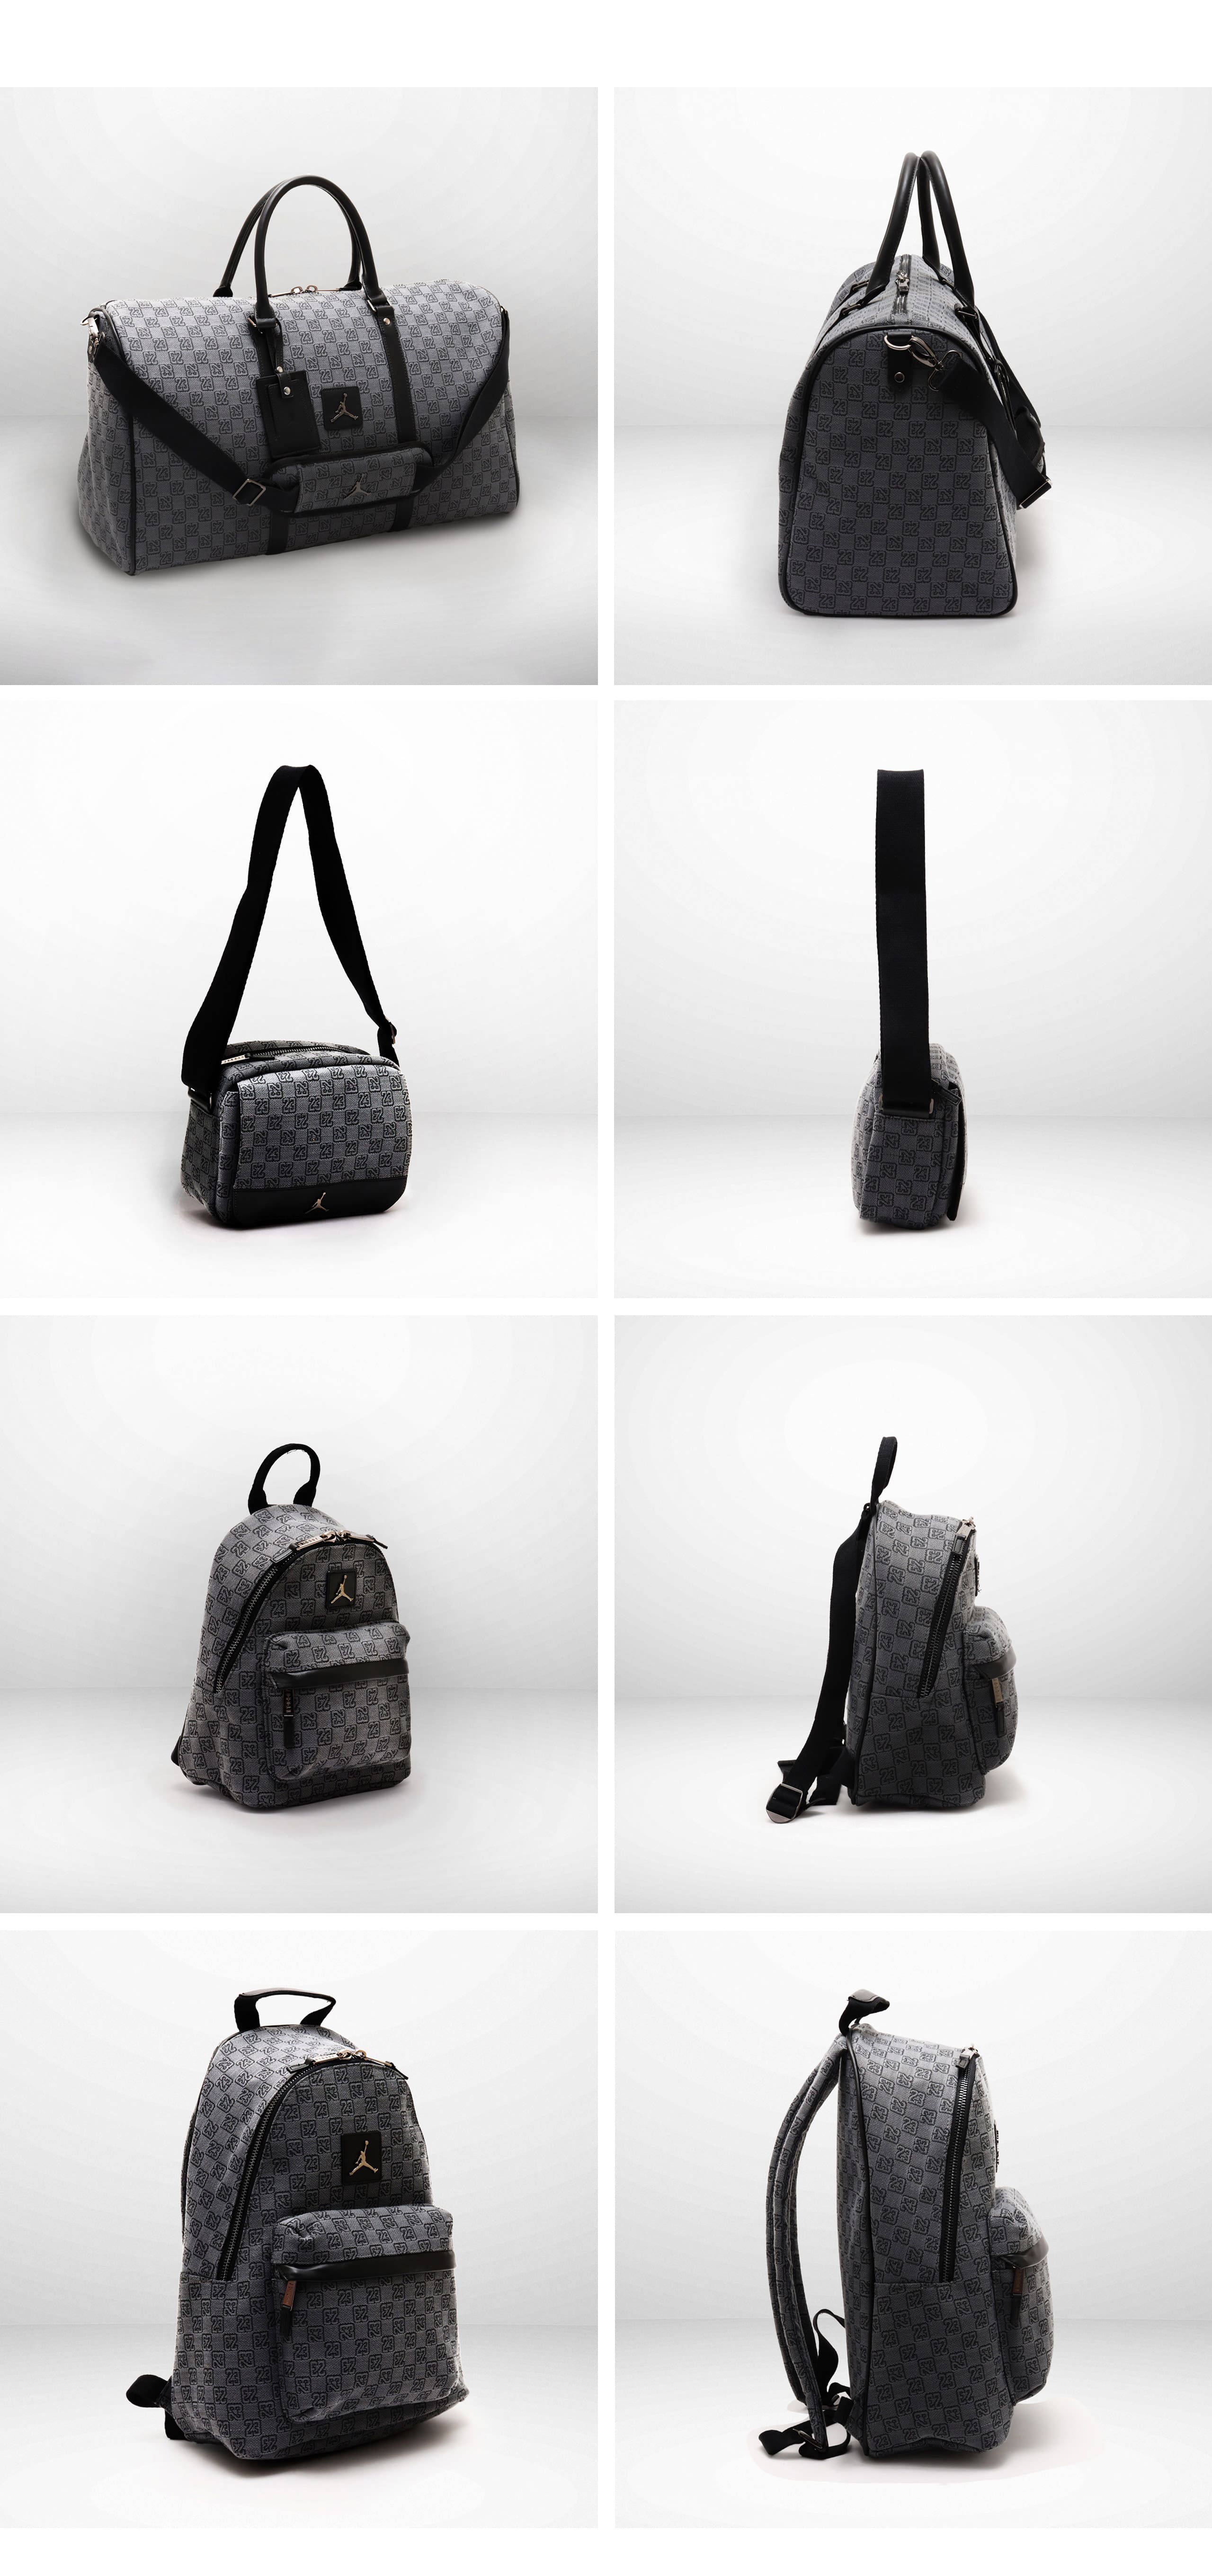 Jordan Brand Monoglam Bag Collection